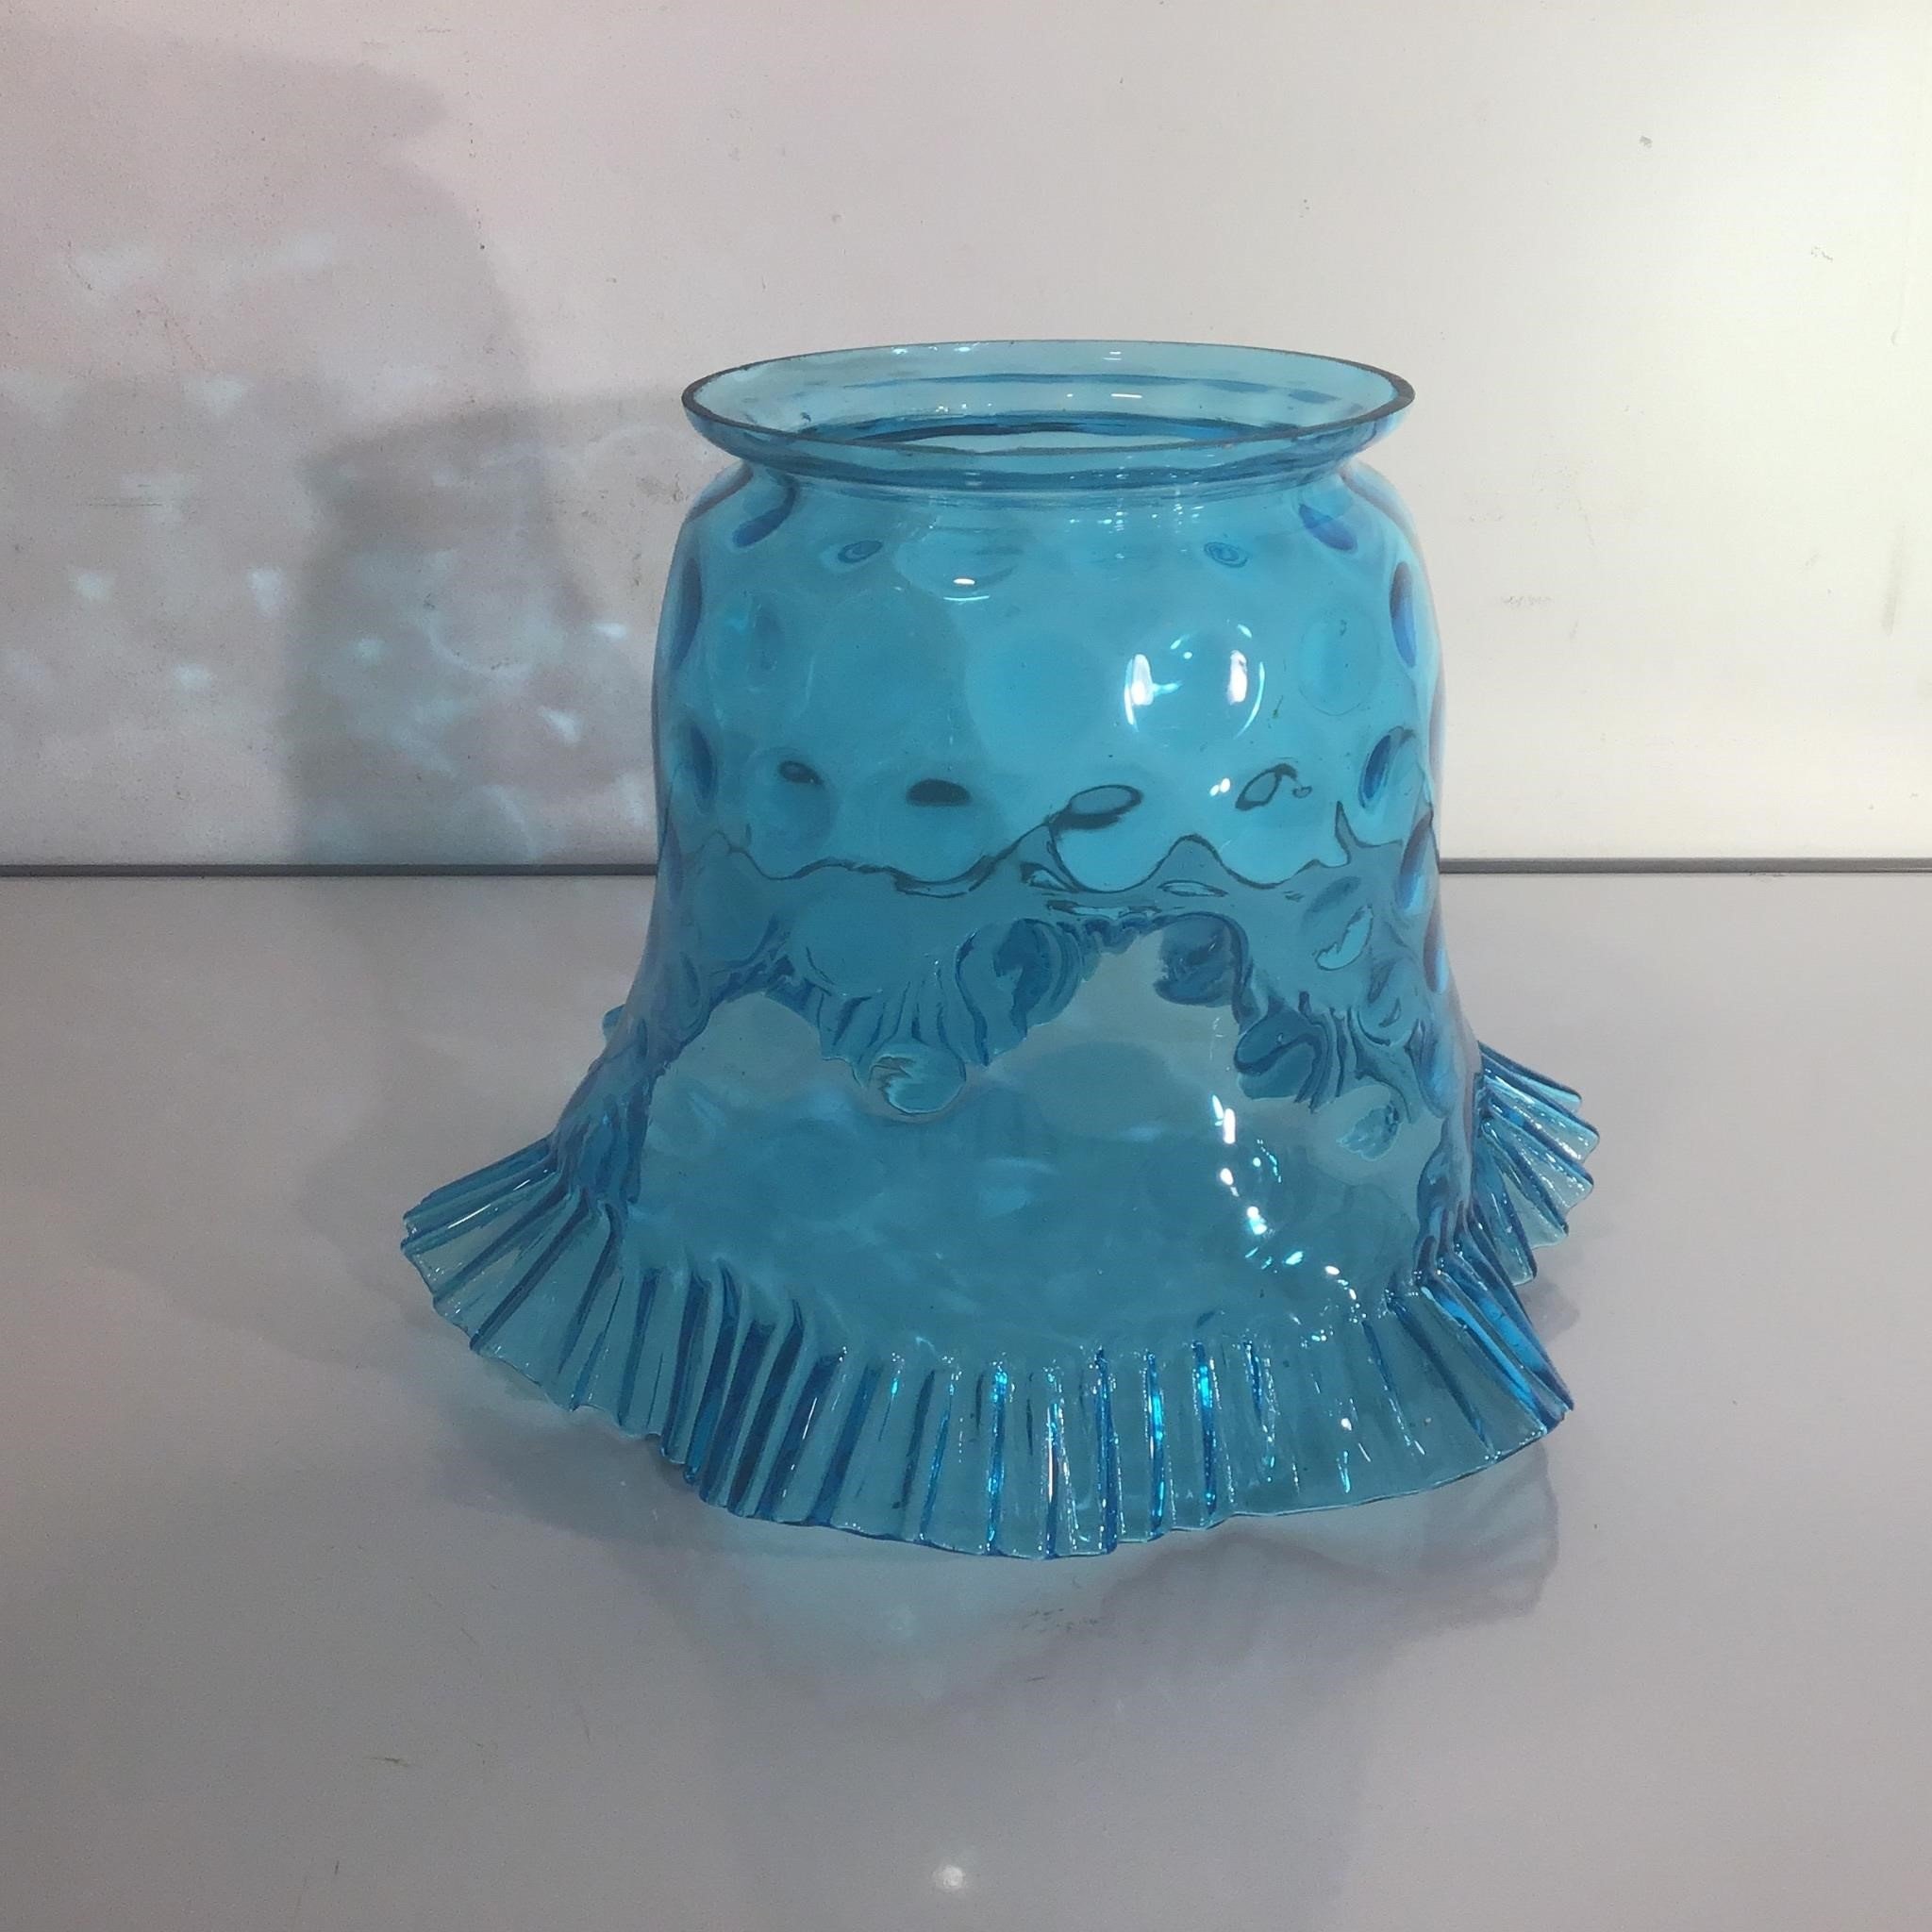 TEAL BLUE RUFFLED GLASS LAMP SHADE